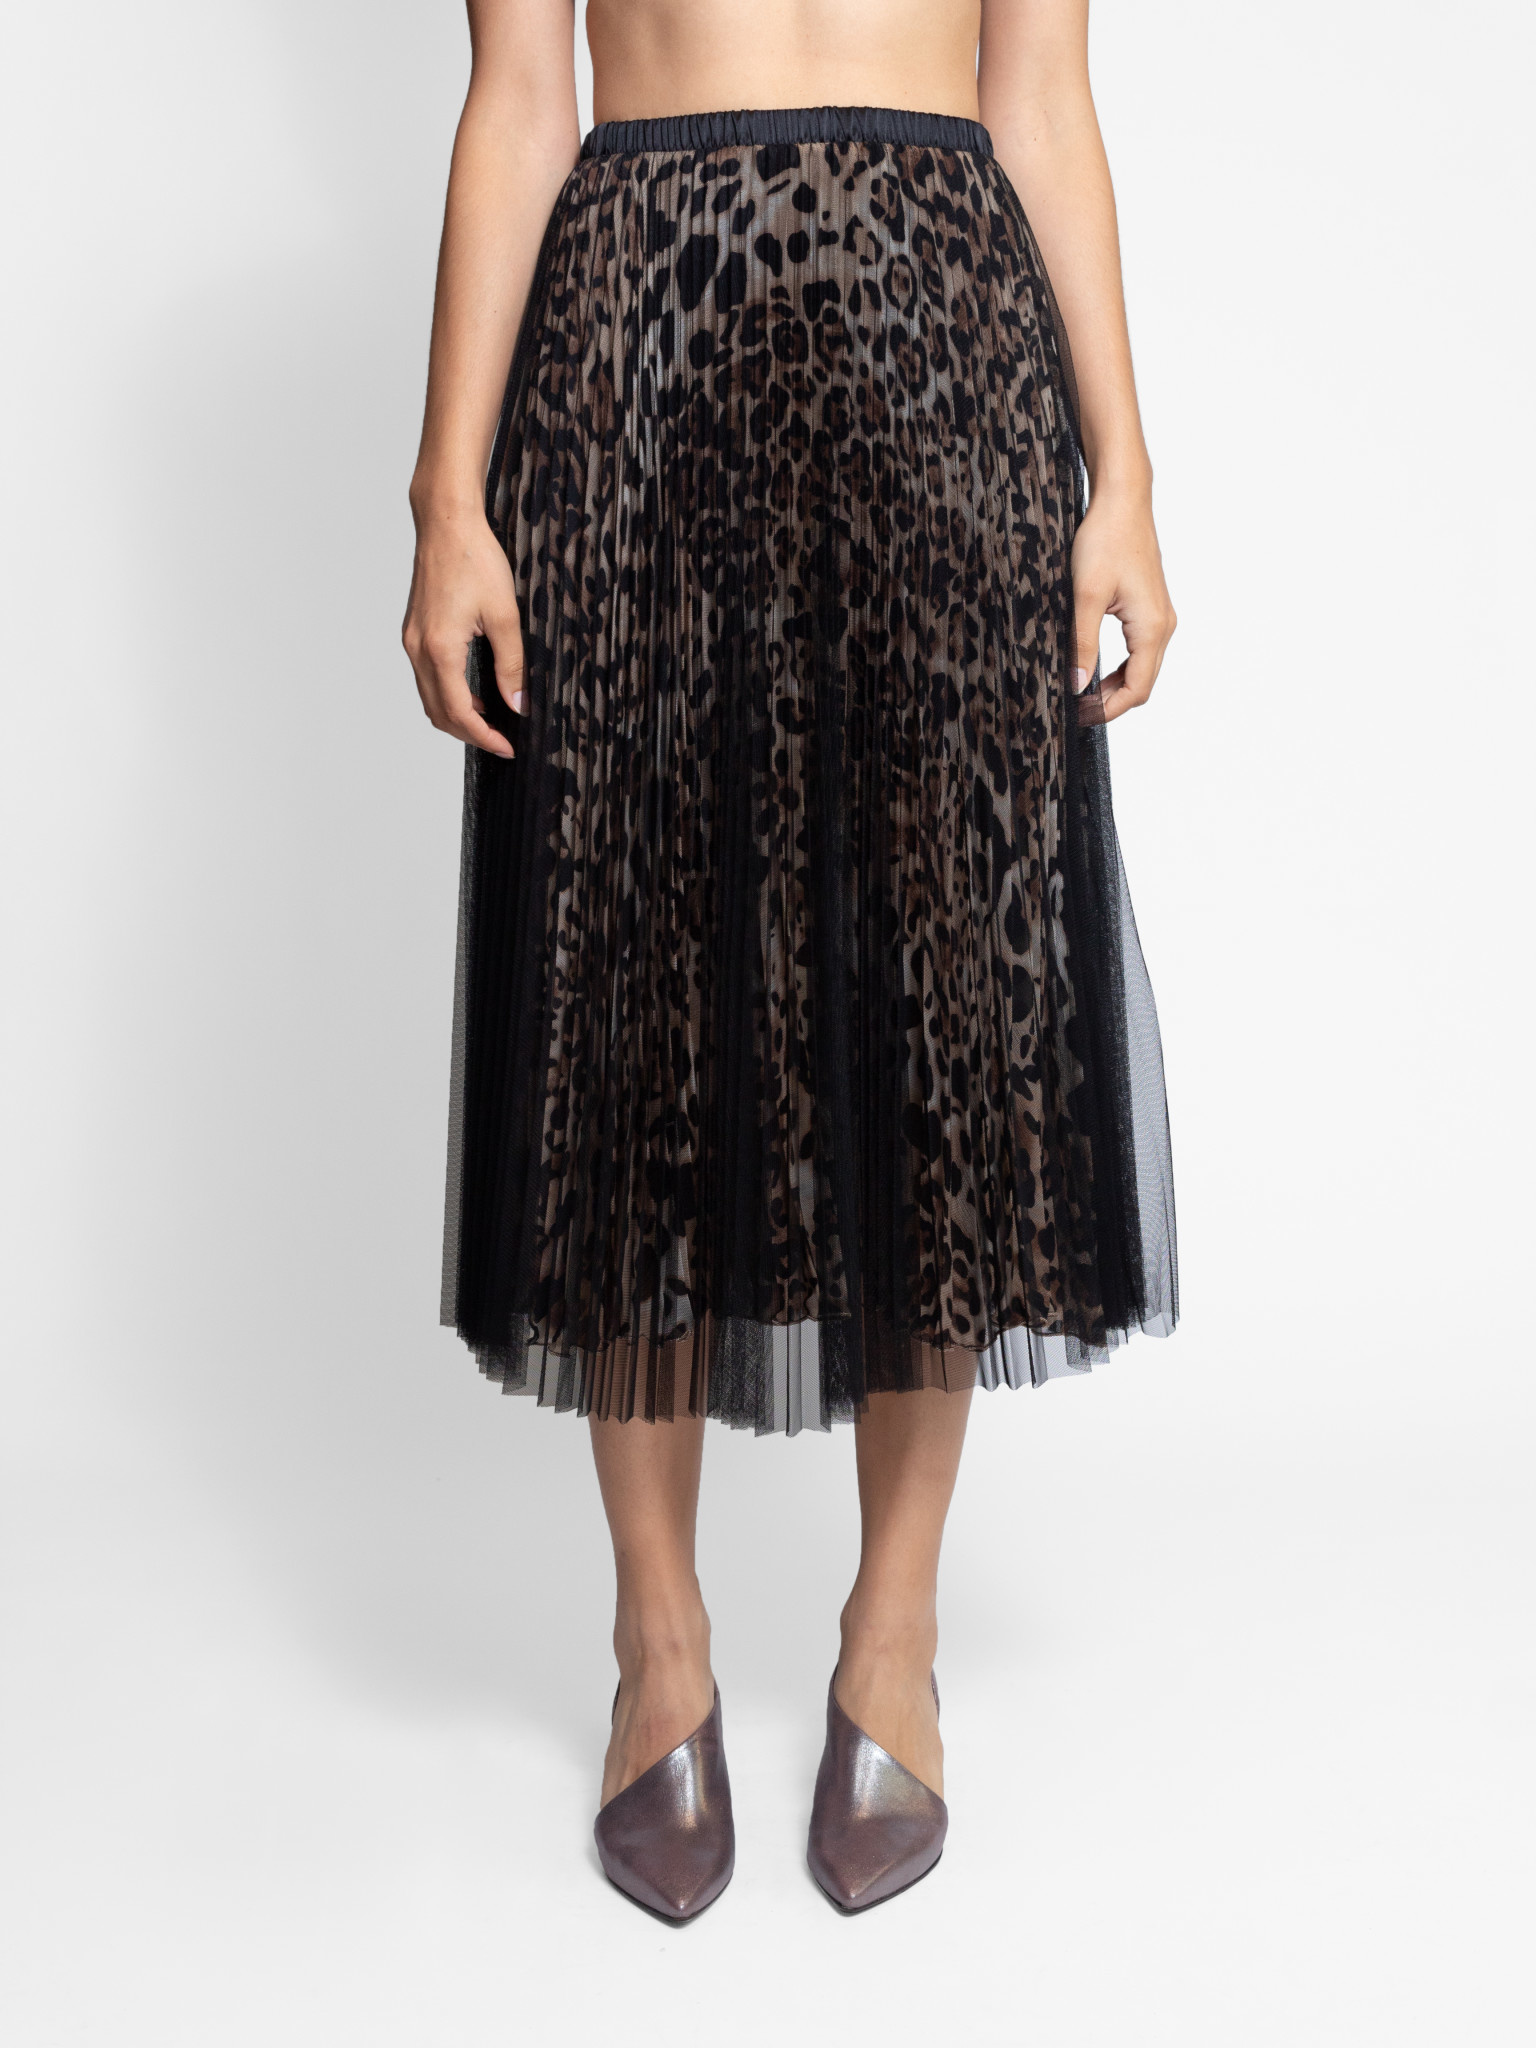 Download Loyd/Ford - Two Layer Mesh Skirt Silk Animal Print Black ...